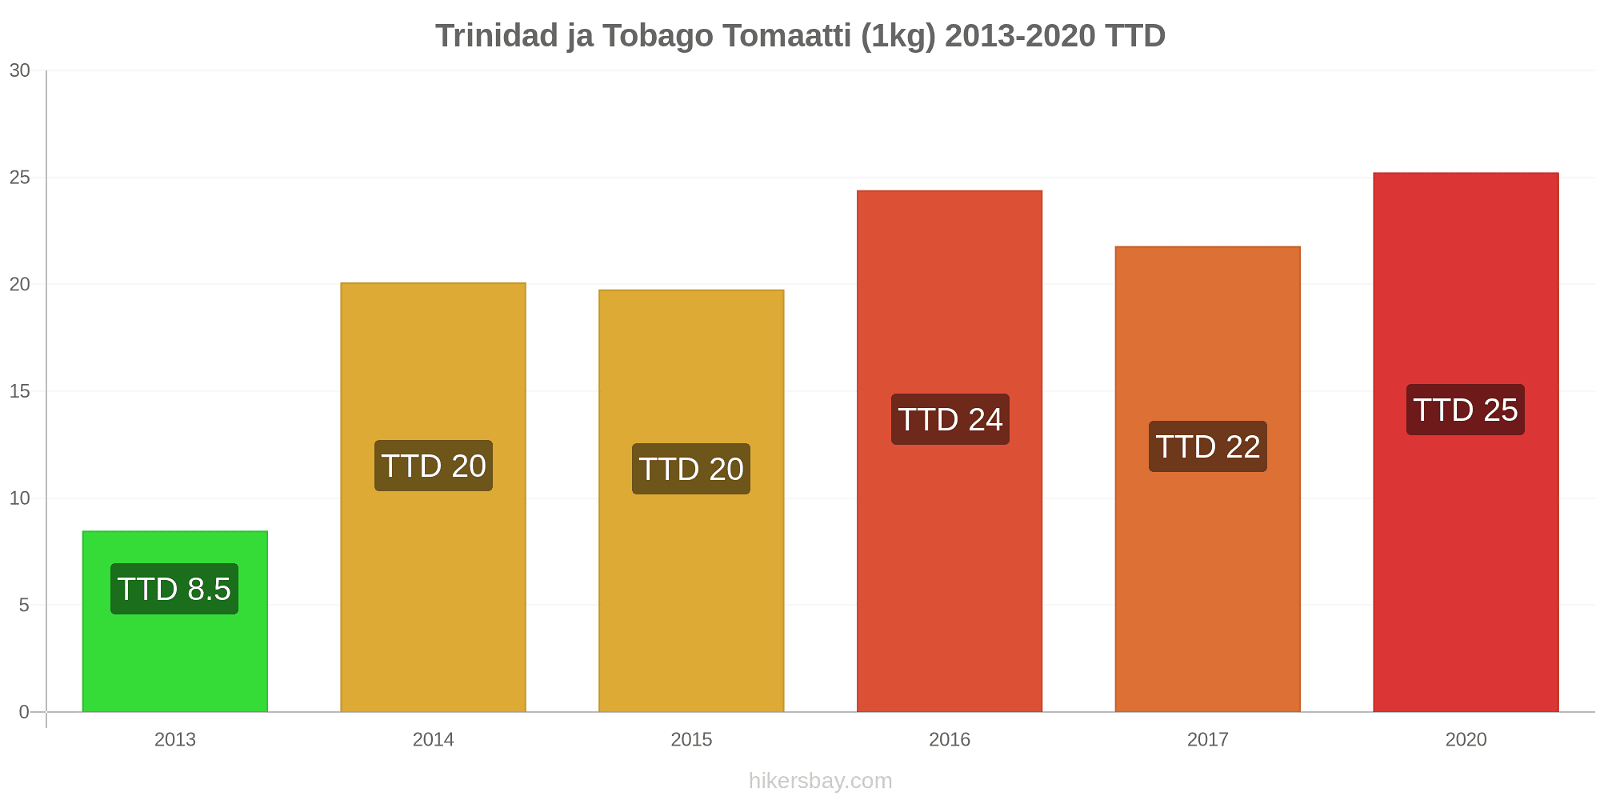 Trinidad ja Tobago hintojen muutokset Tomaatti (1kg) hikersbay.com